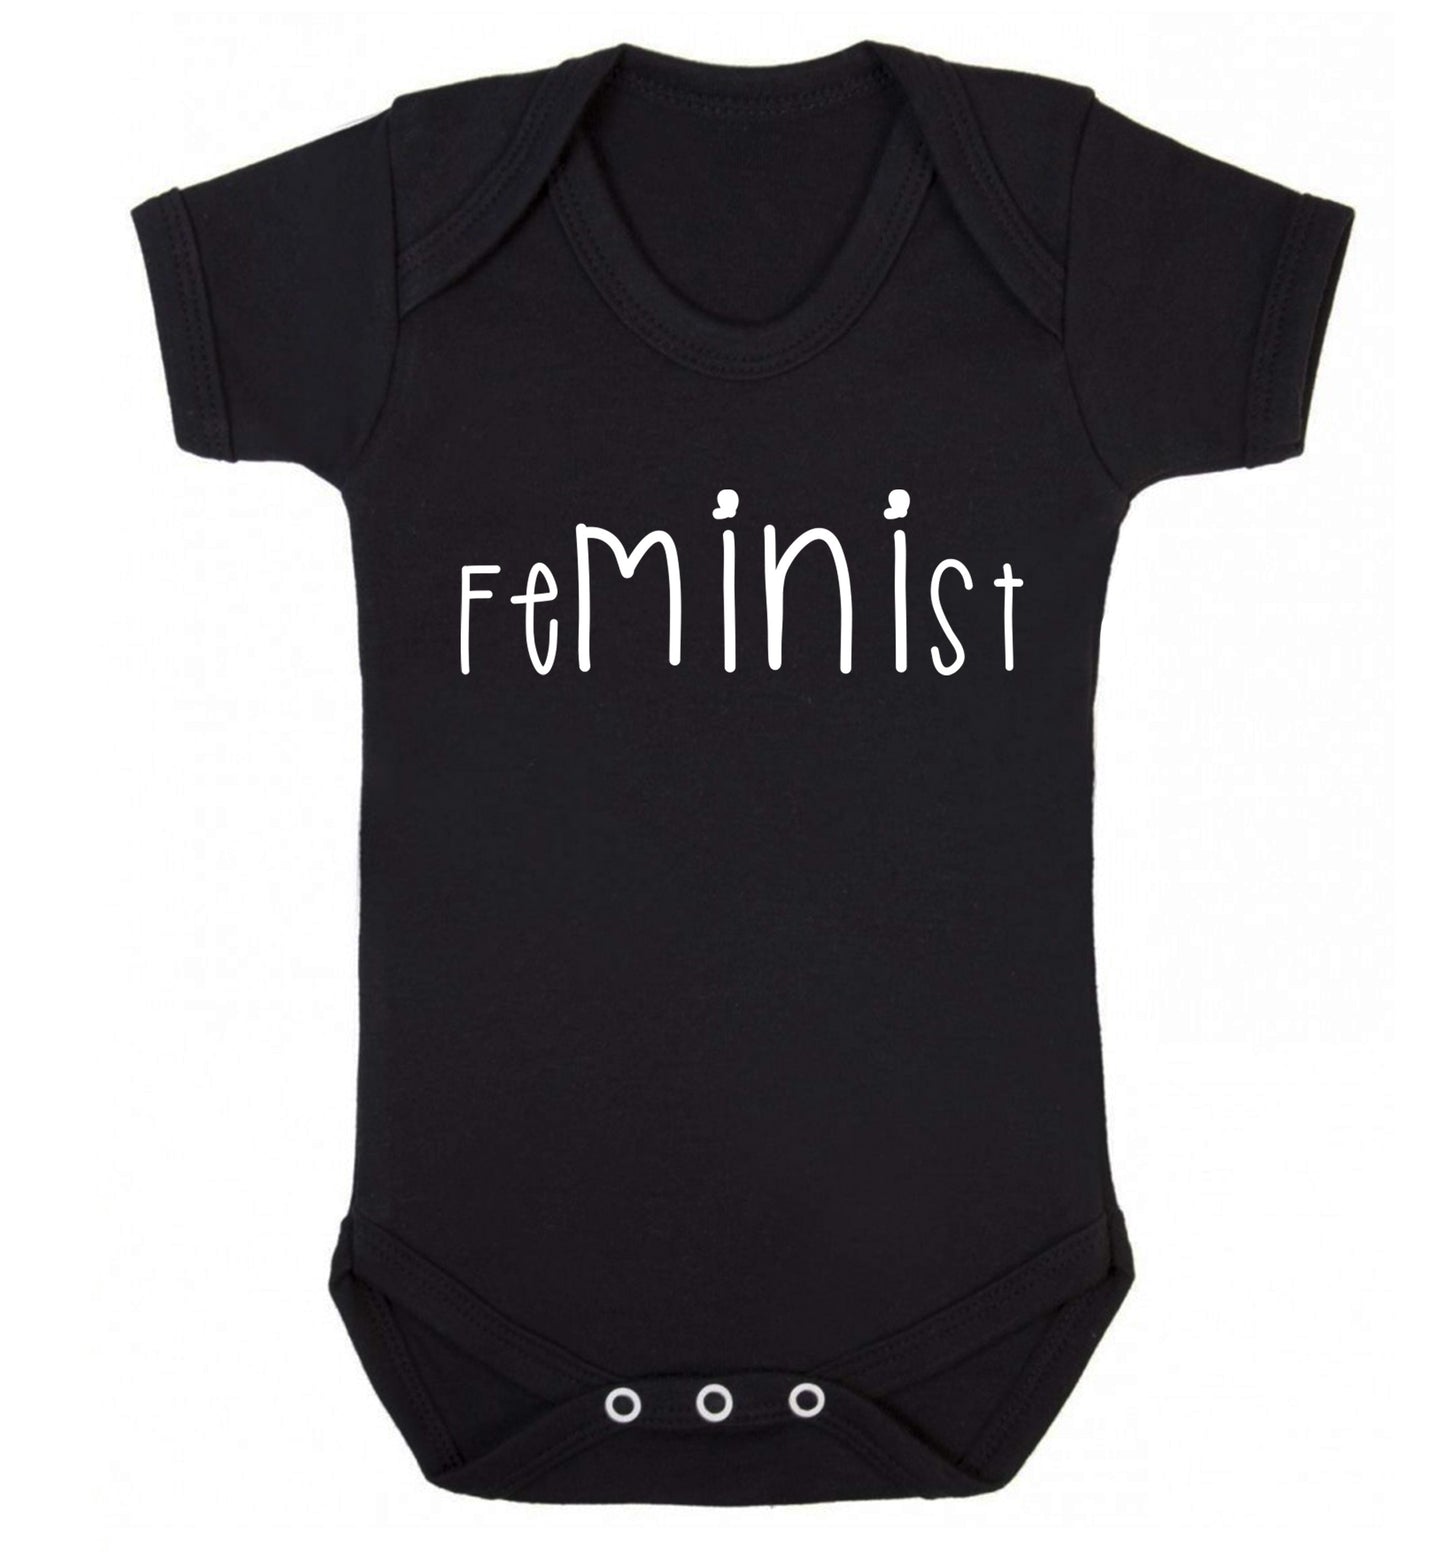 FeMINIst Baby Vest black 18-24 months